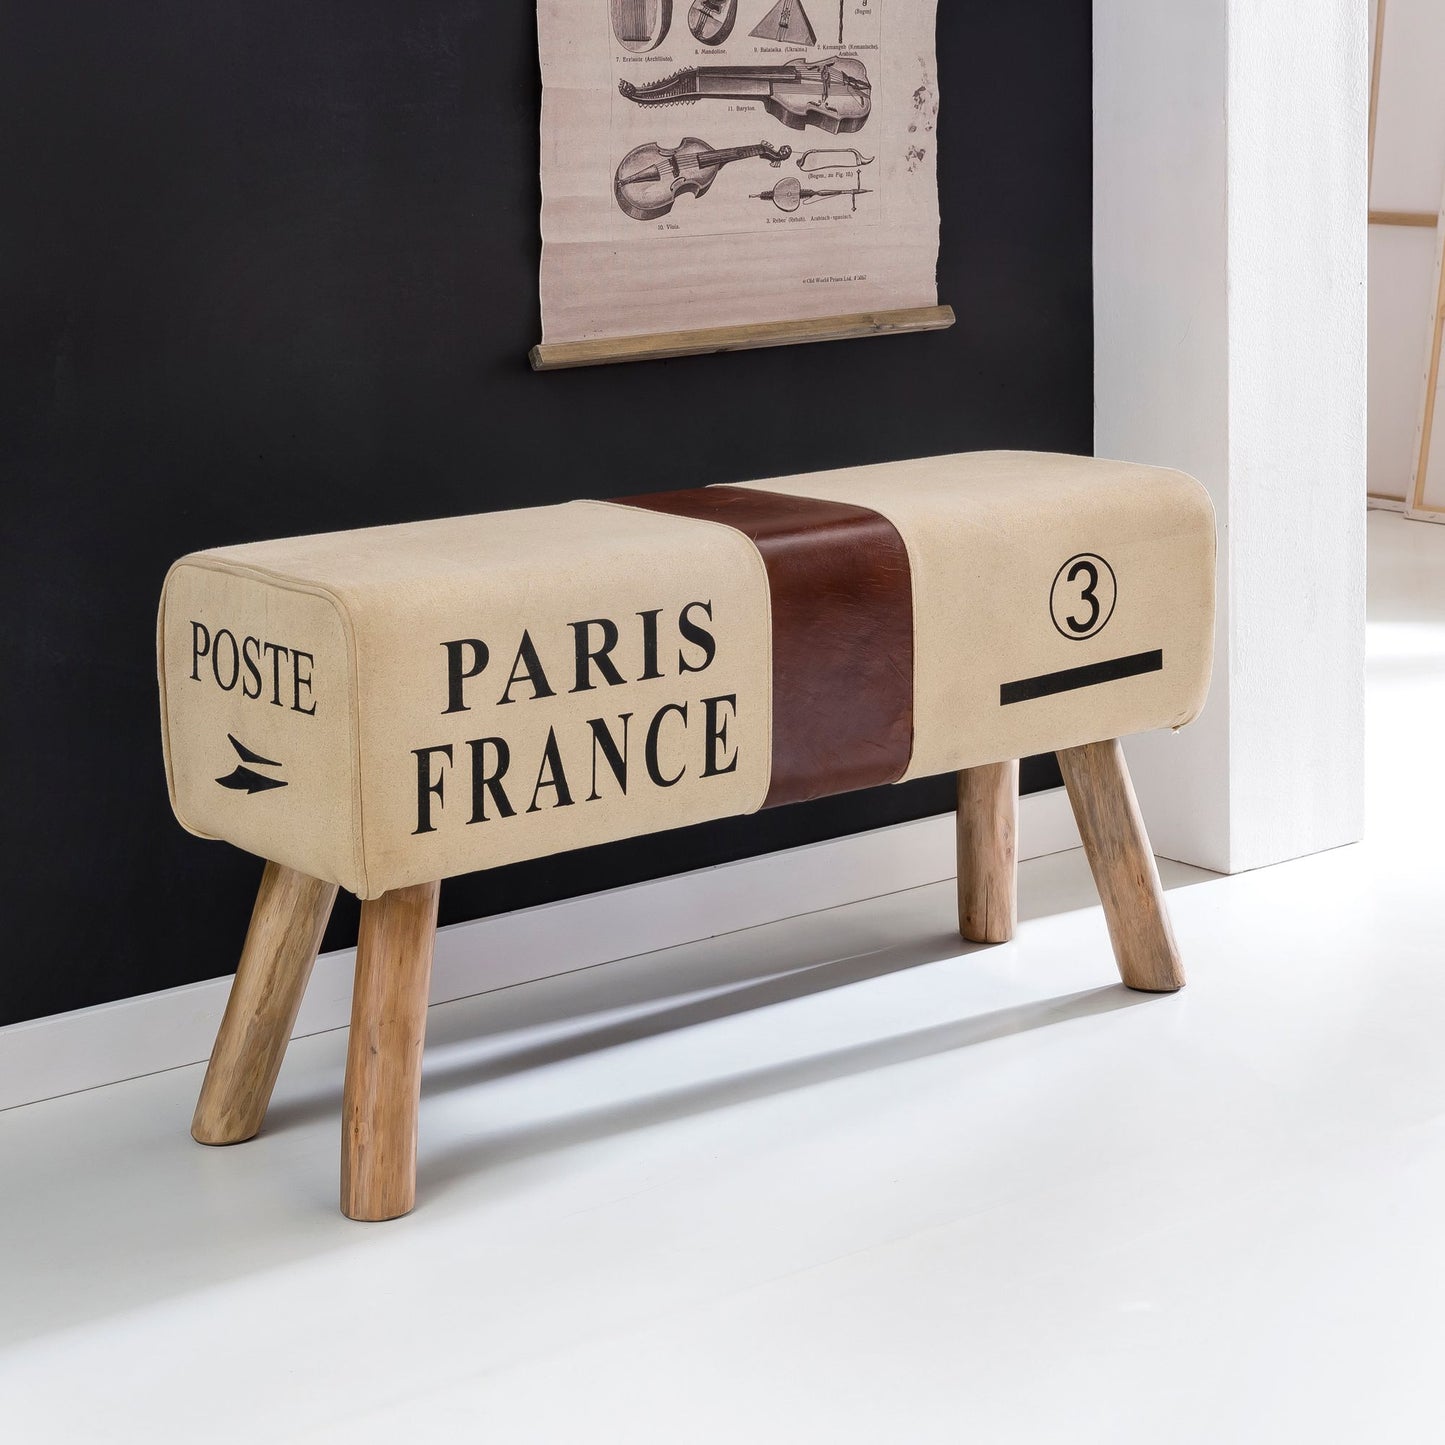 Nancy's Turnbok Bench - Bench - Bench - Gymnastics stool - Springbok - 91 cm - Canvas - Leather - Wood - Brown